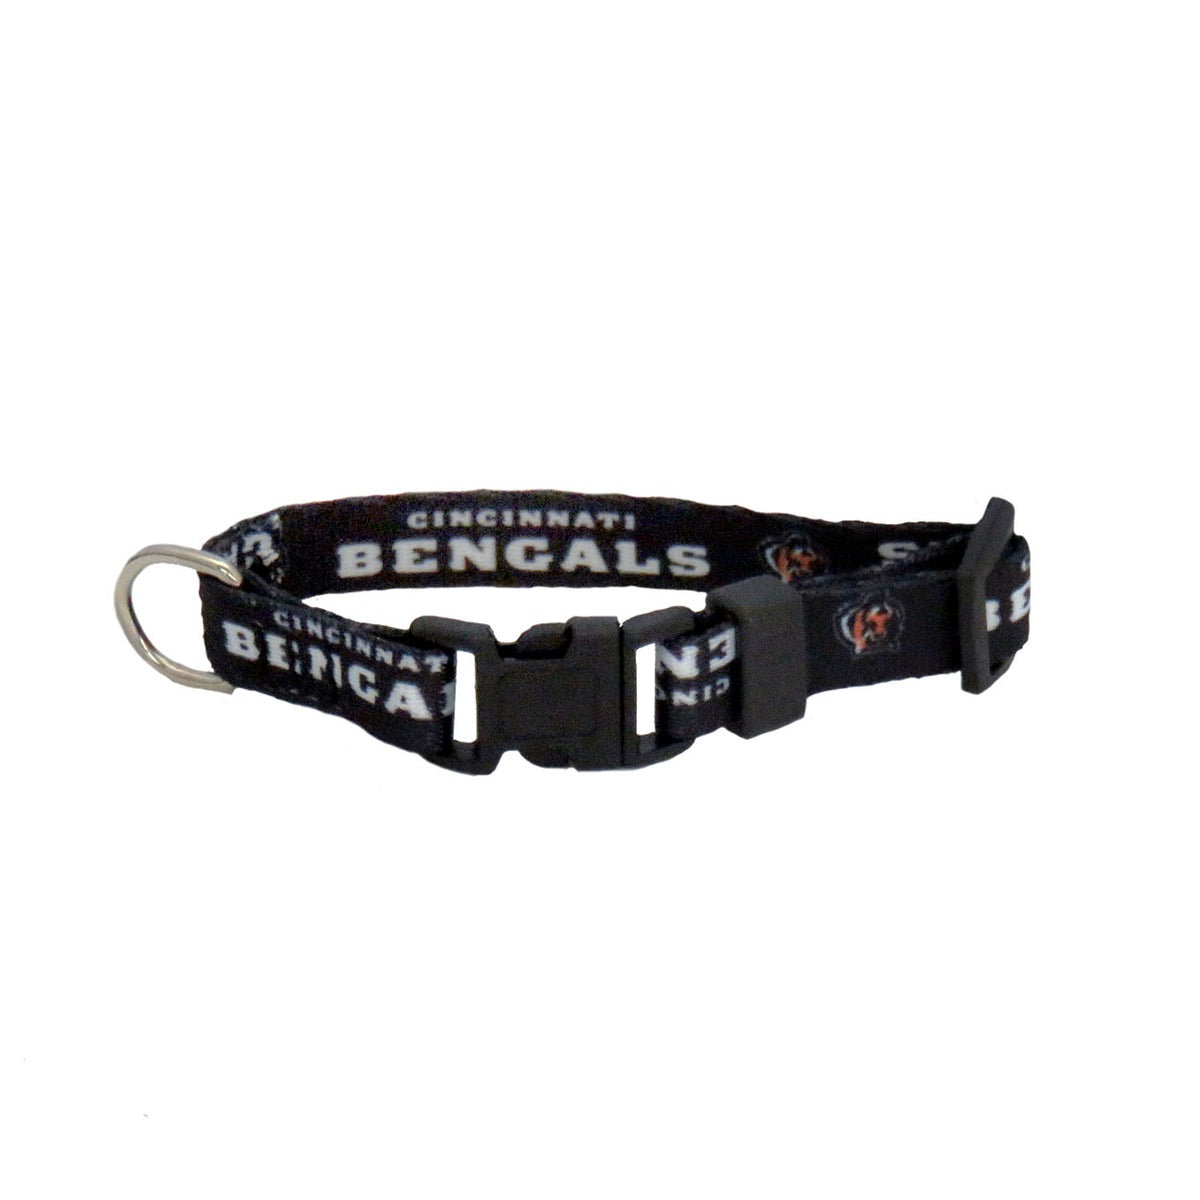 Cincinnati Bengals Ltd Dog Collar or Leash - 3 Red Rovers